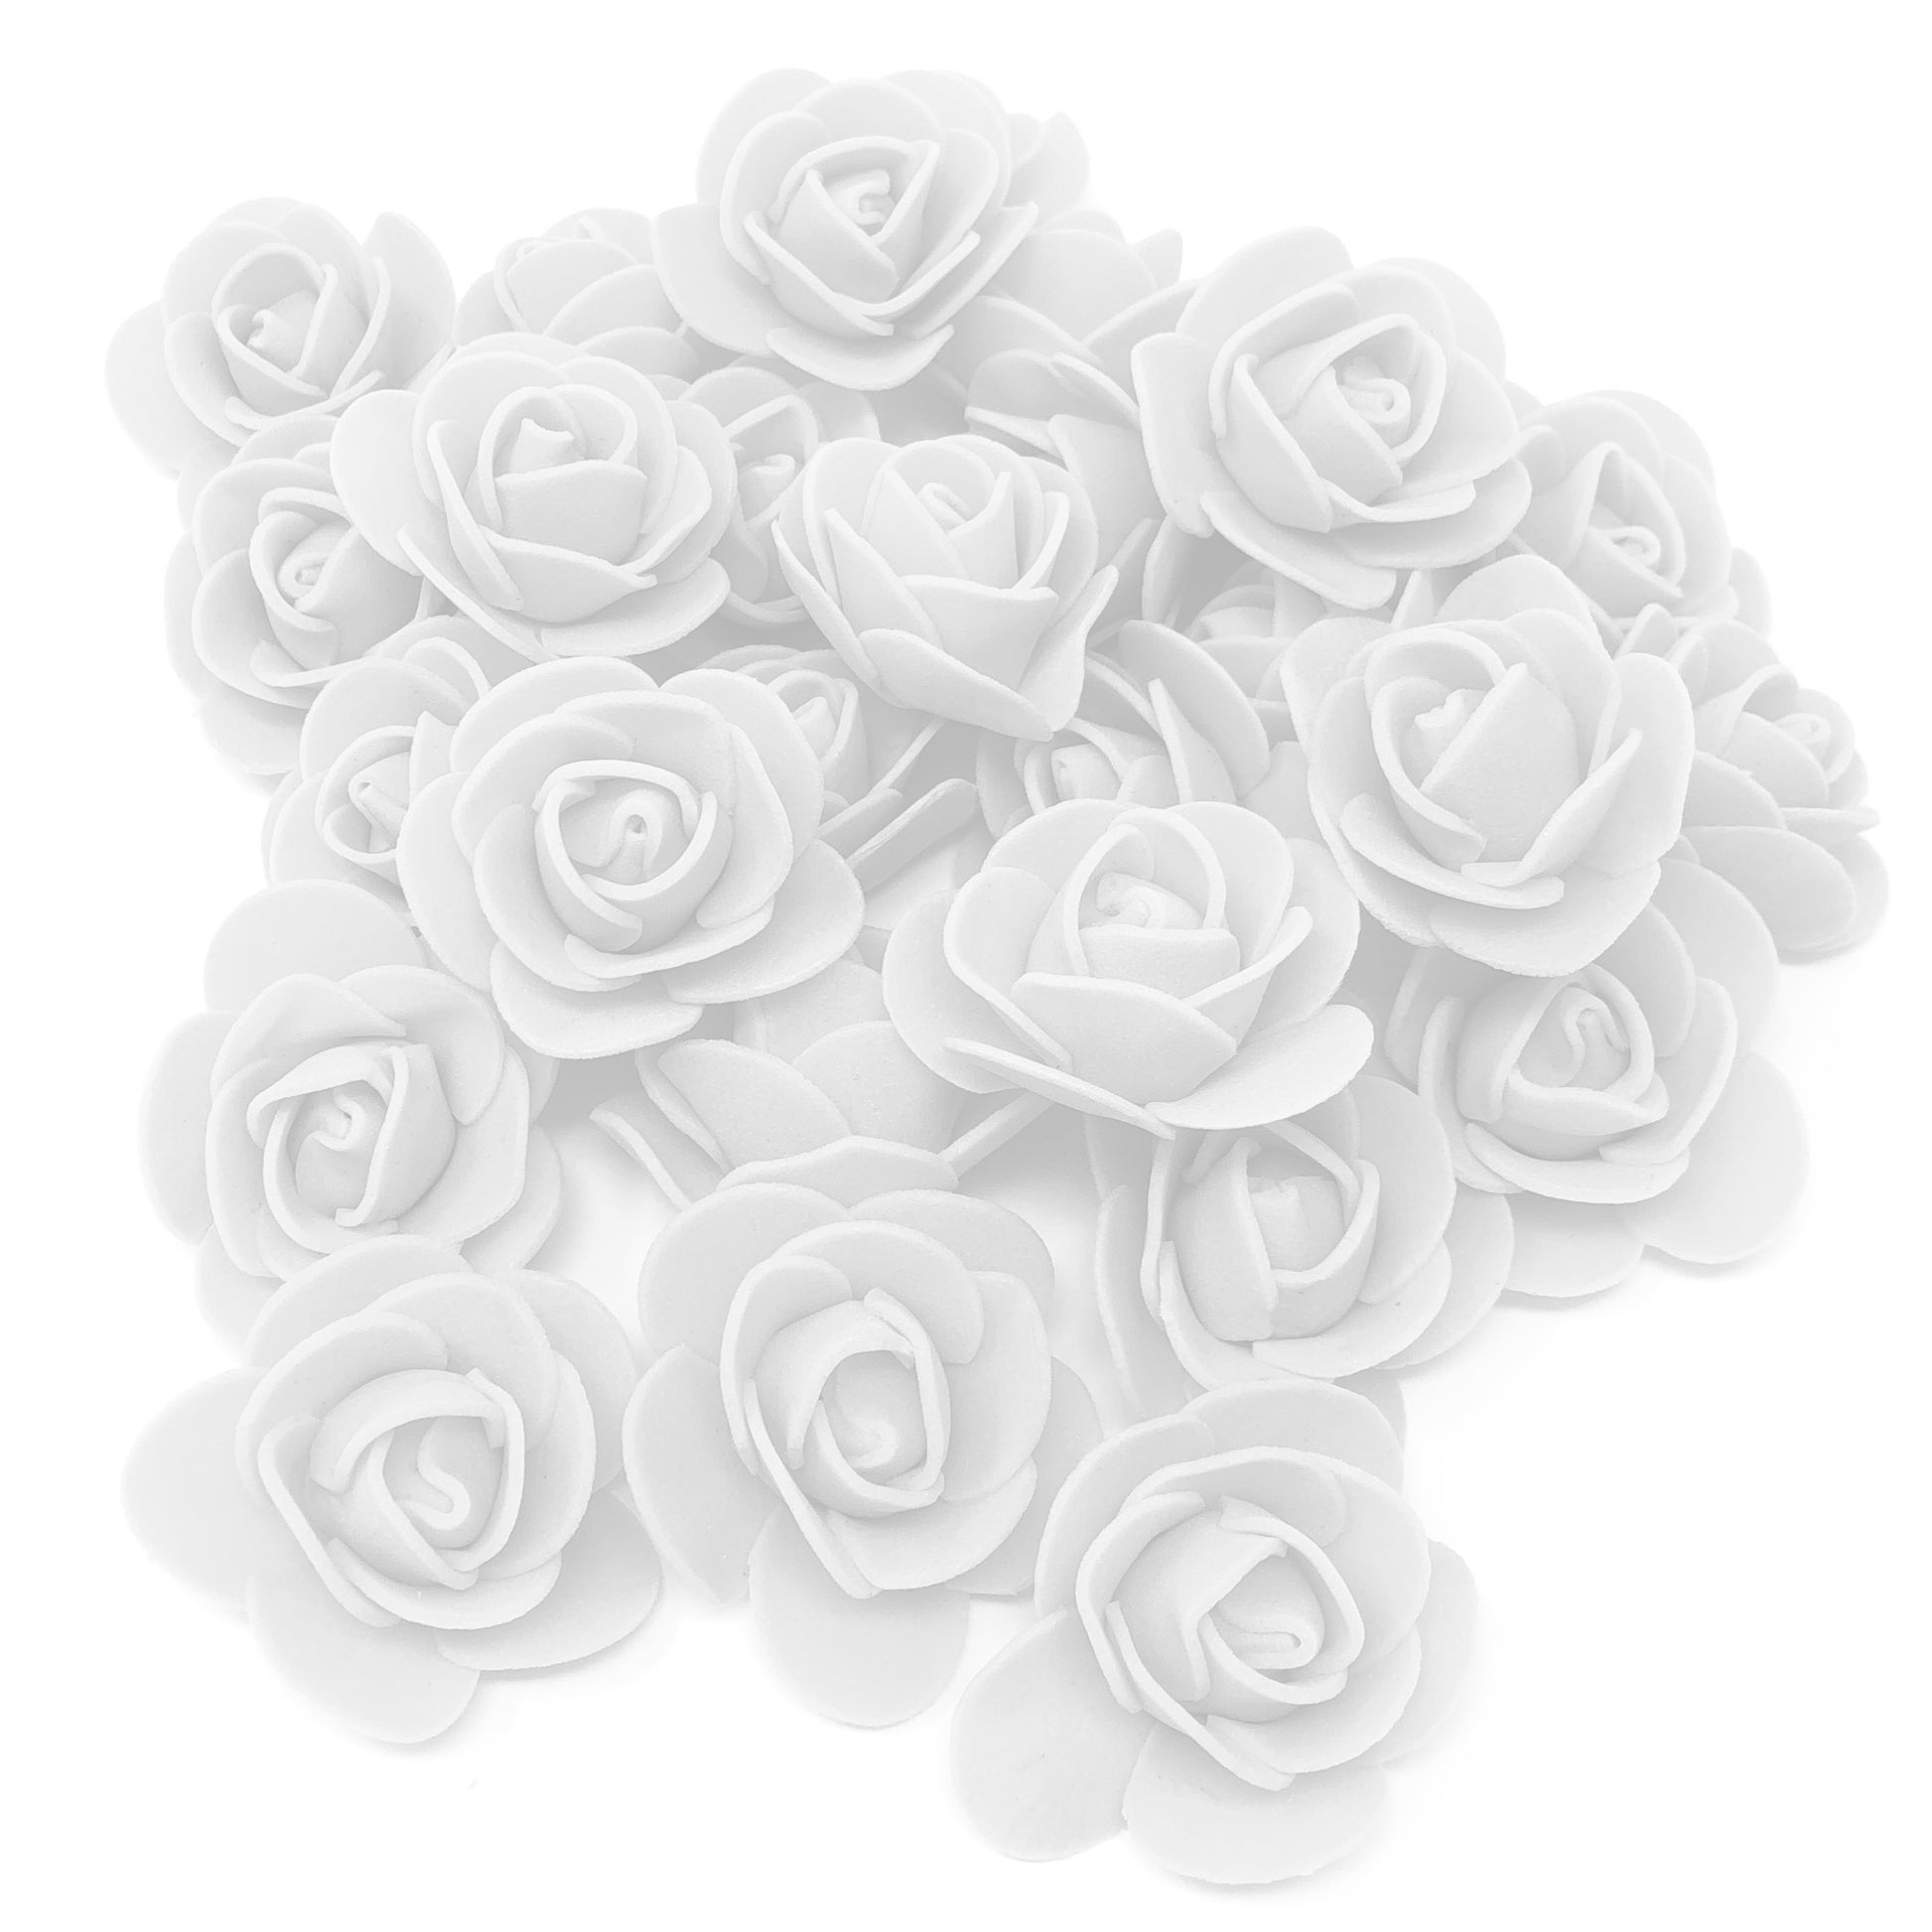 White 30mm Foam Rose Flowers